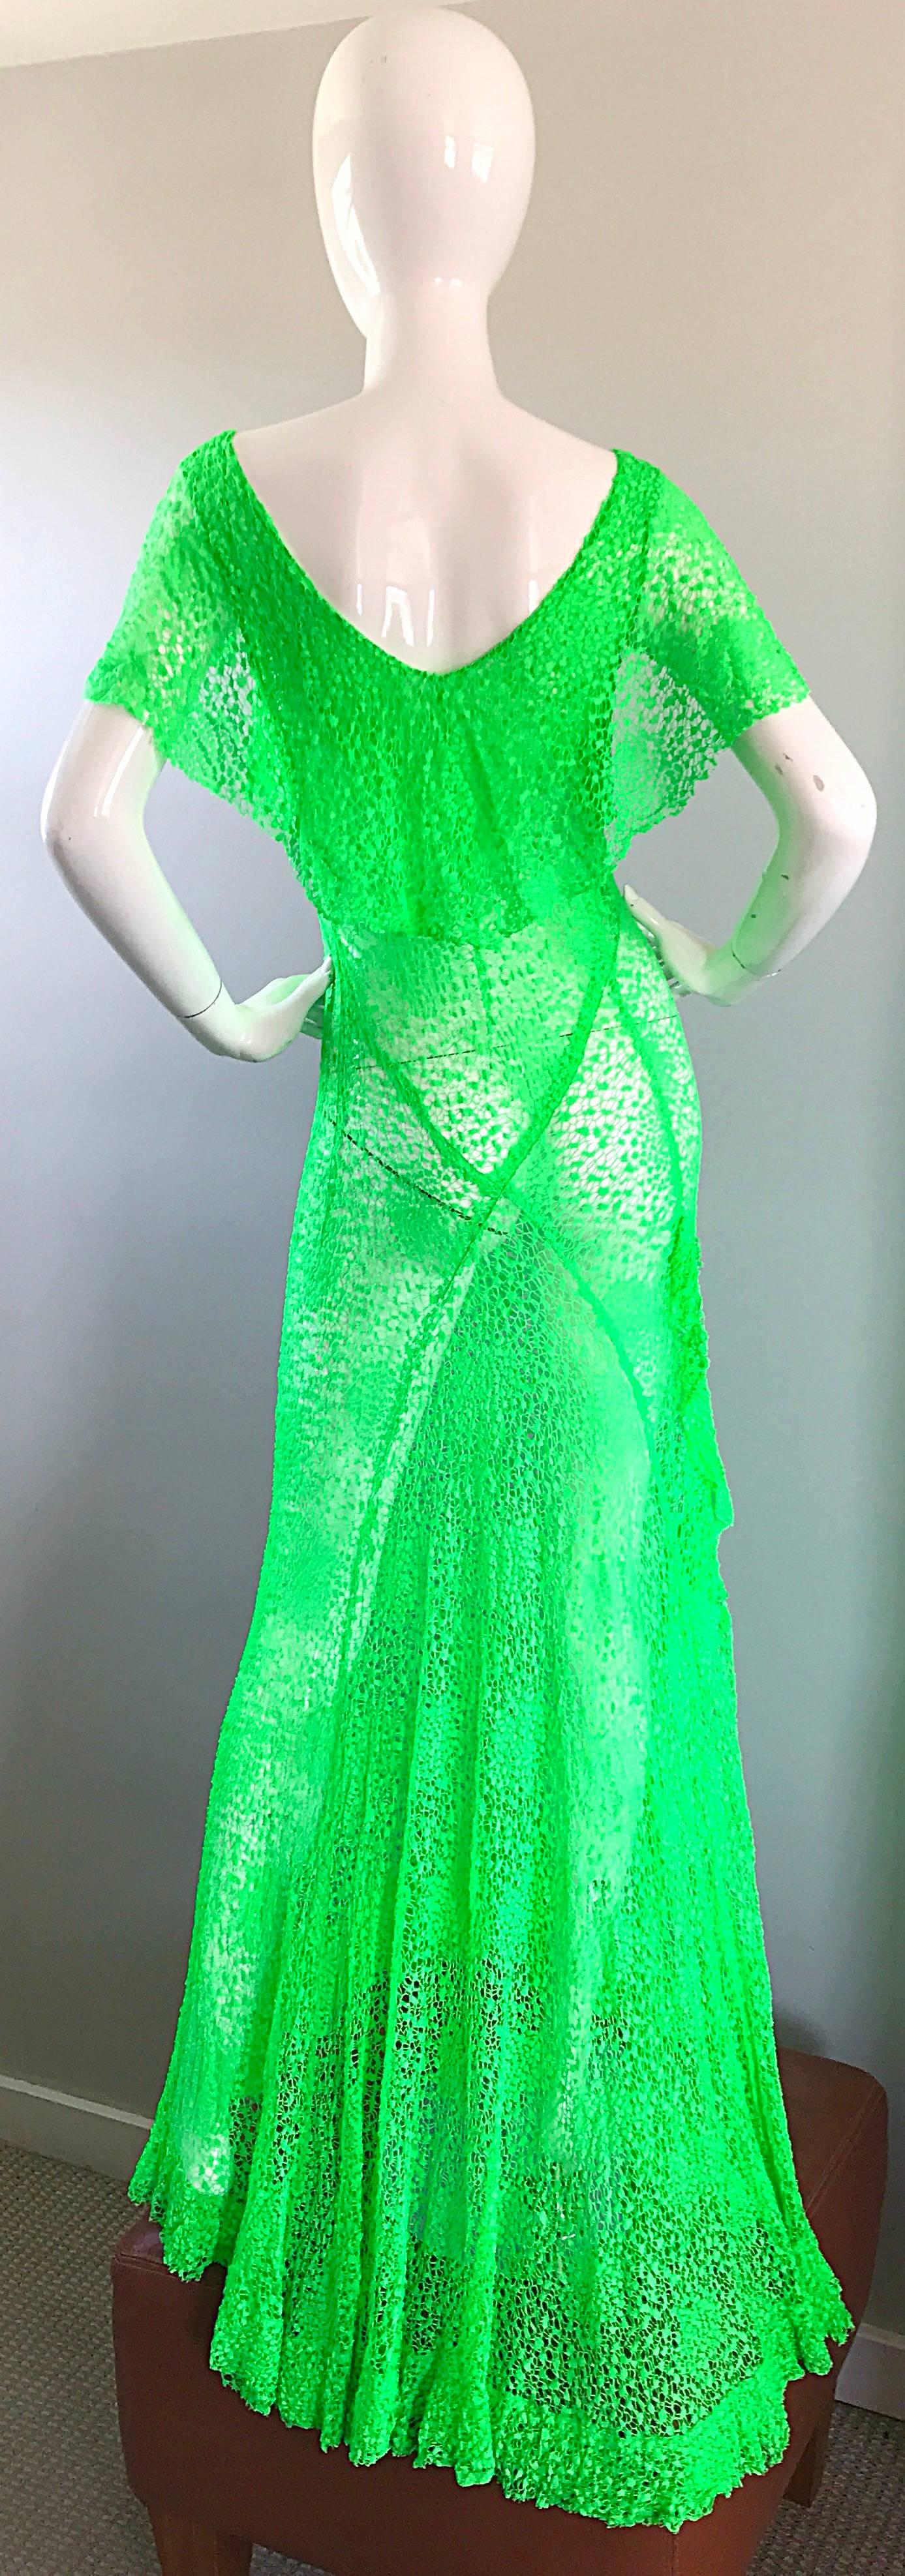 1930s Bright Neon Green Hand Crochet Vintage Bias Cut Gown 4